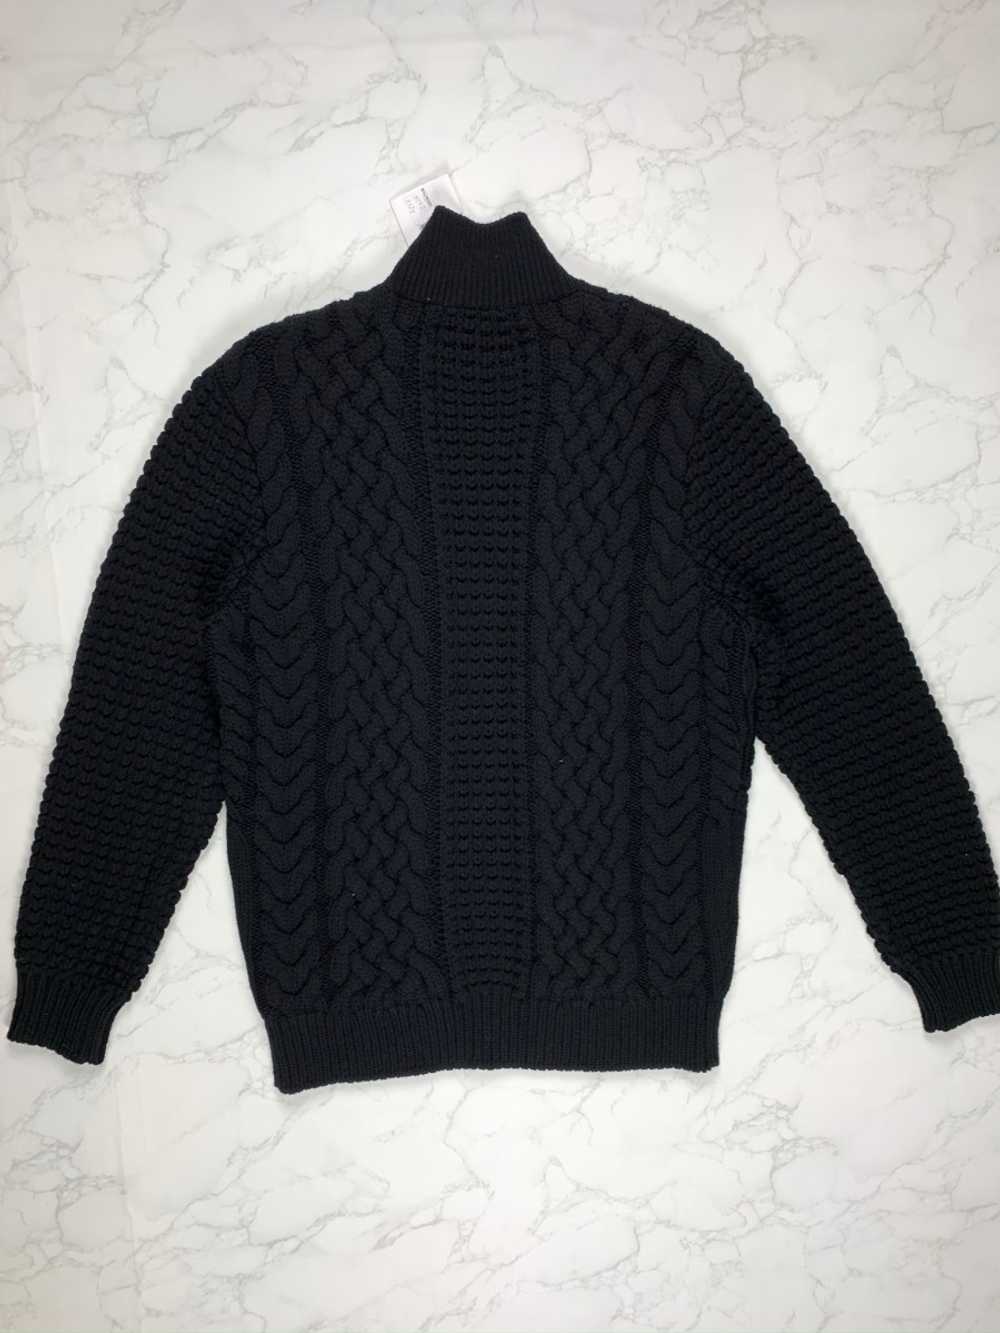 Balmain Black Wool Cable Knit Turtleneck - image 8